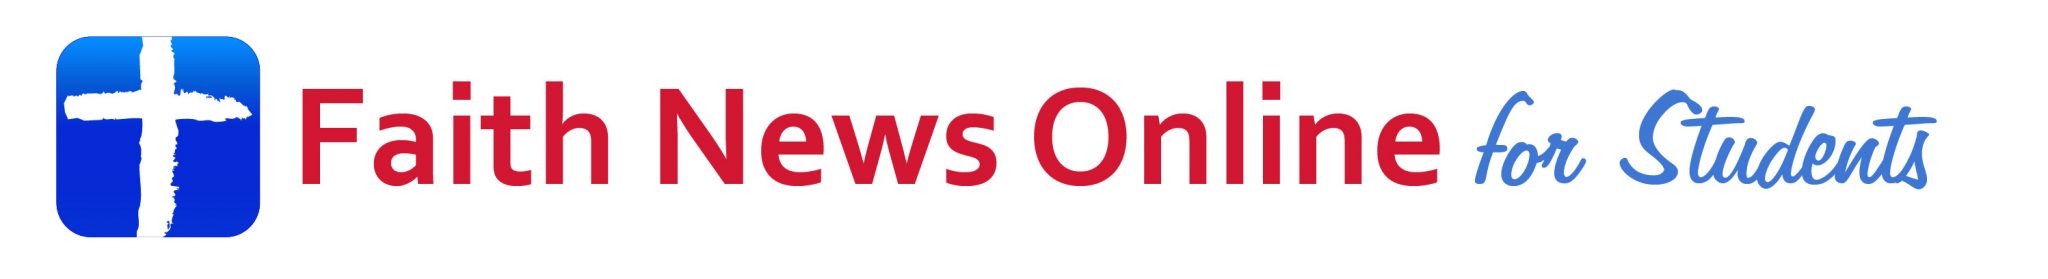 Faith-News-Online-logo-for-students-2016